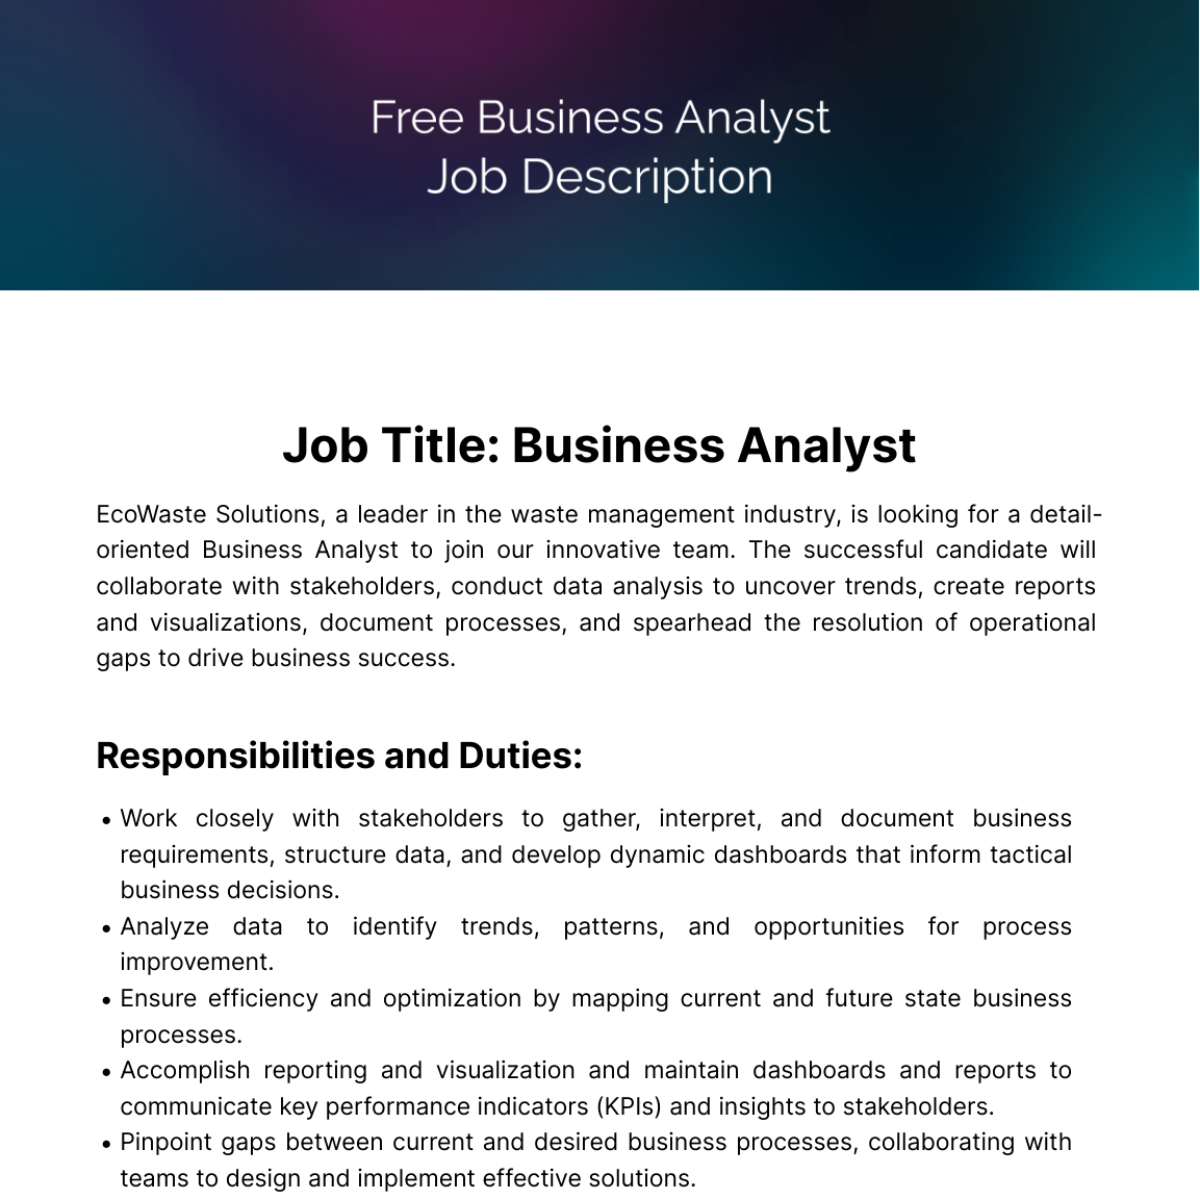 Free Business Analyst Job Description Template